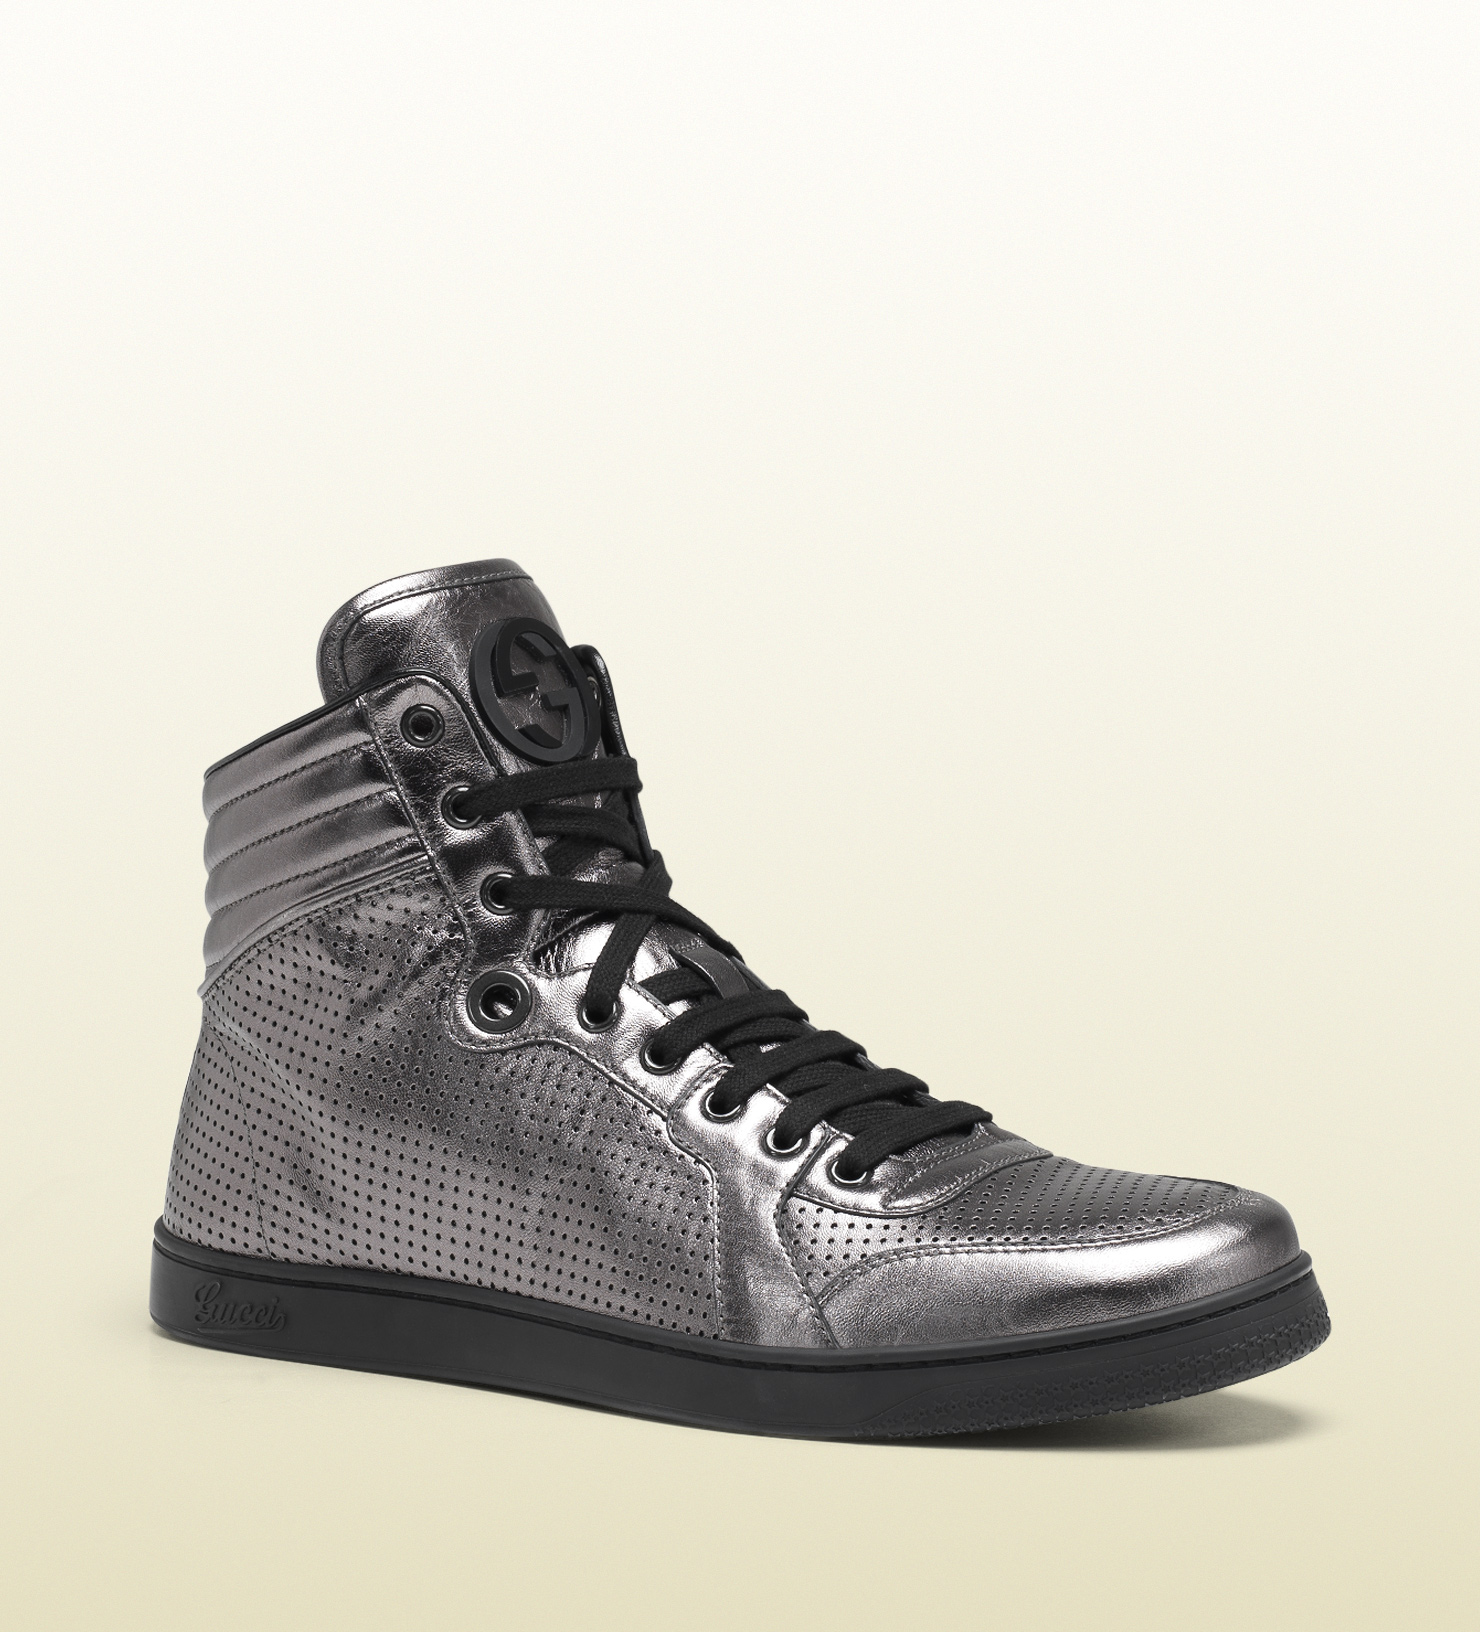 Lyst - Gucci Metallic Dark Grey Leather Hightop Sneaker in Metallic for Men